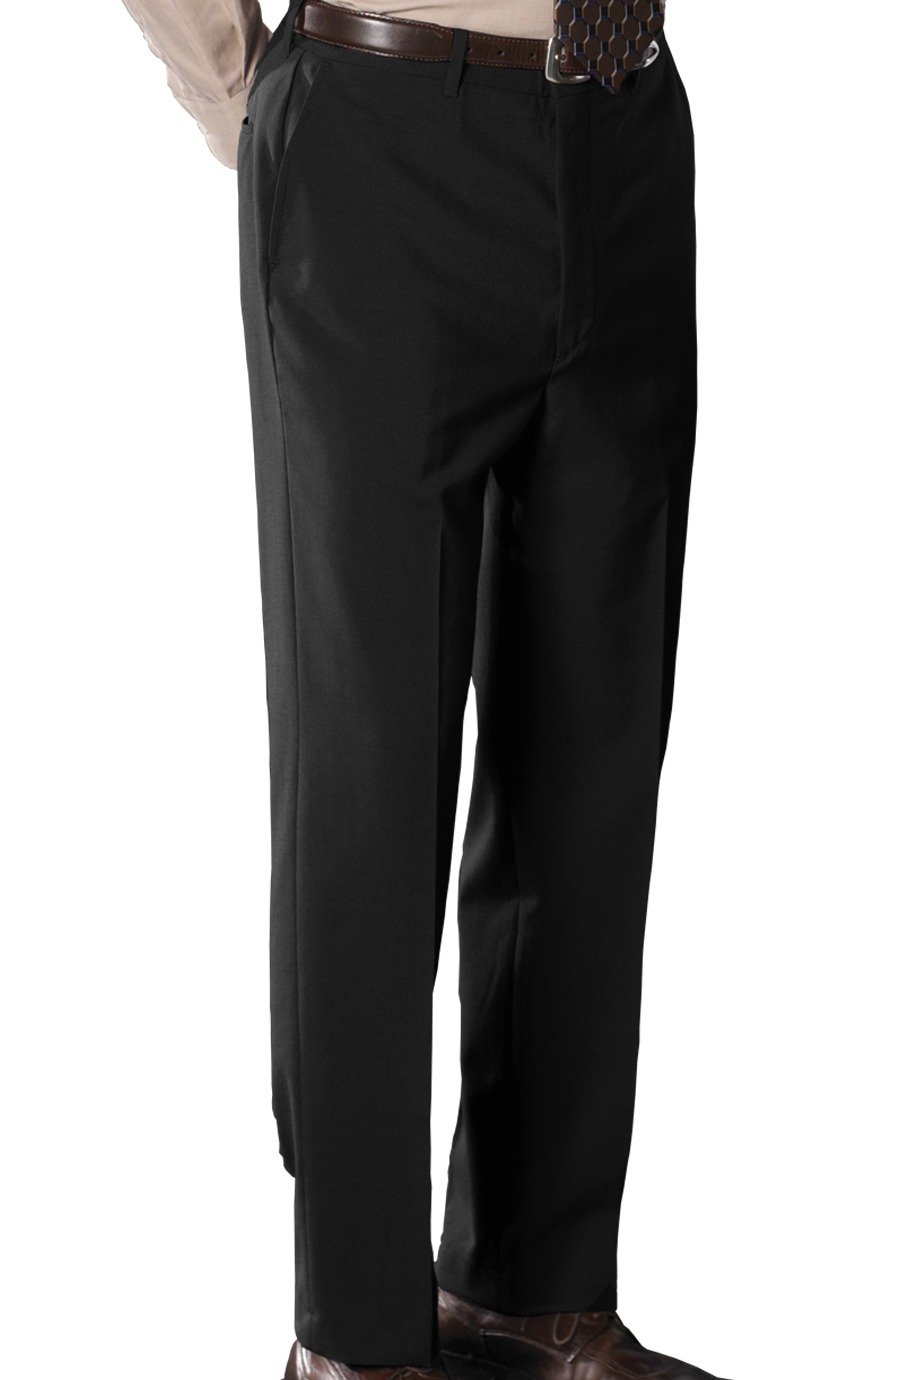 Edwards Garment 2780 - Men's Wool Blend Flat Front Pant